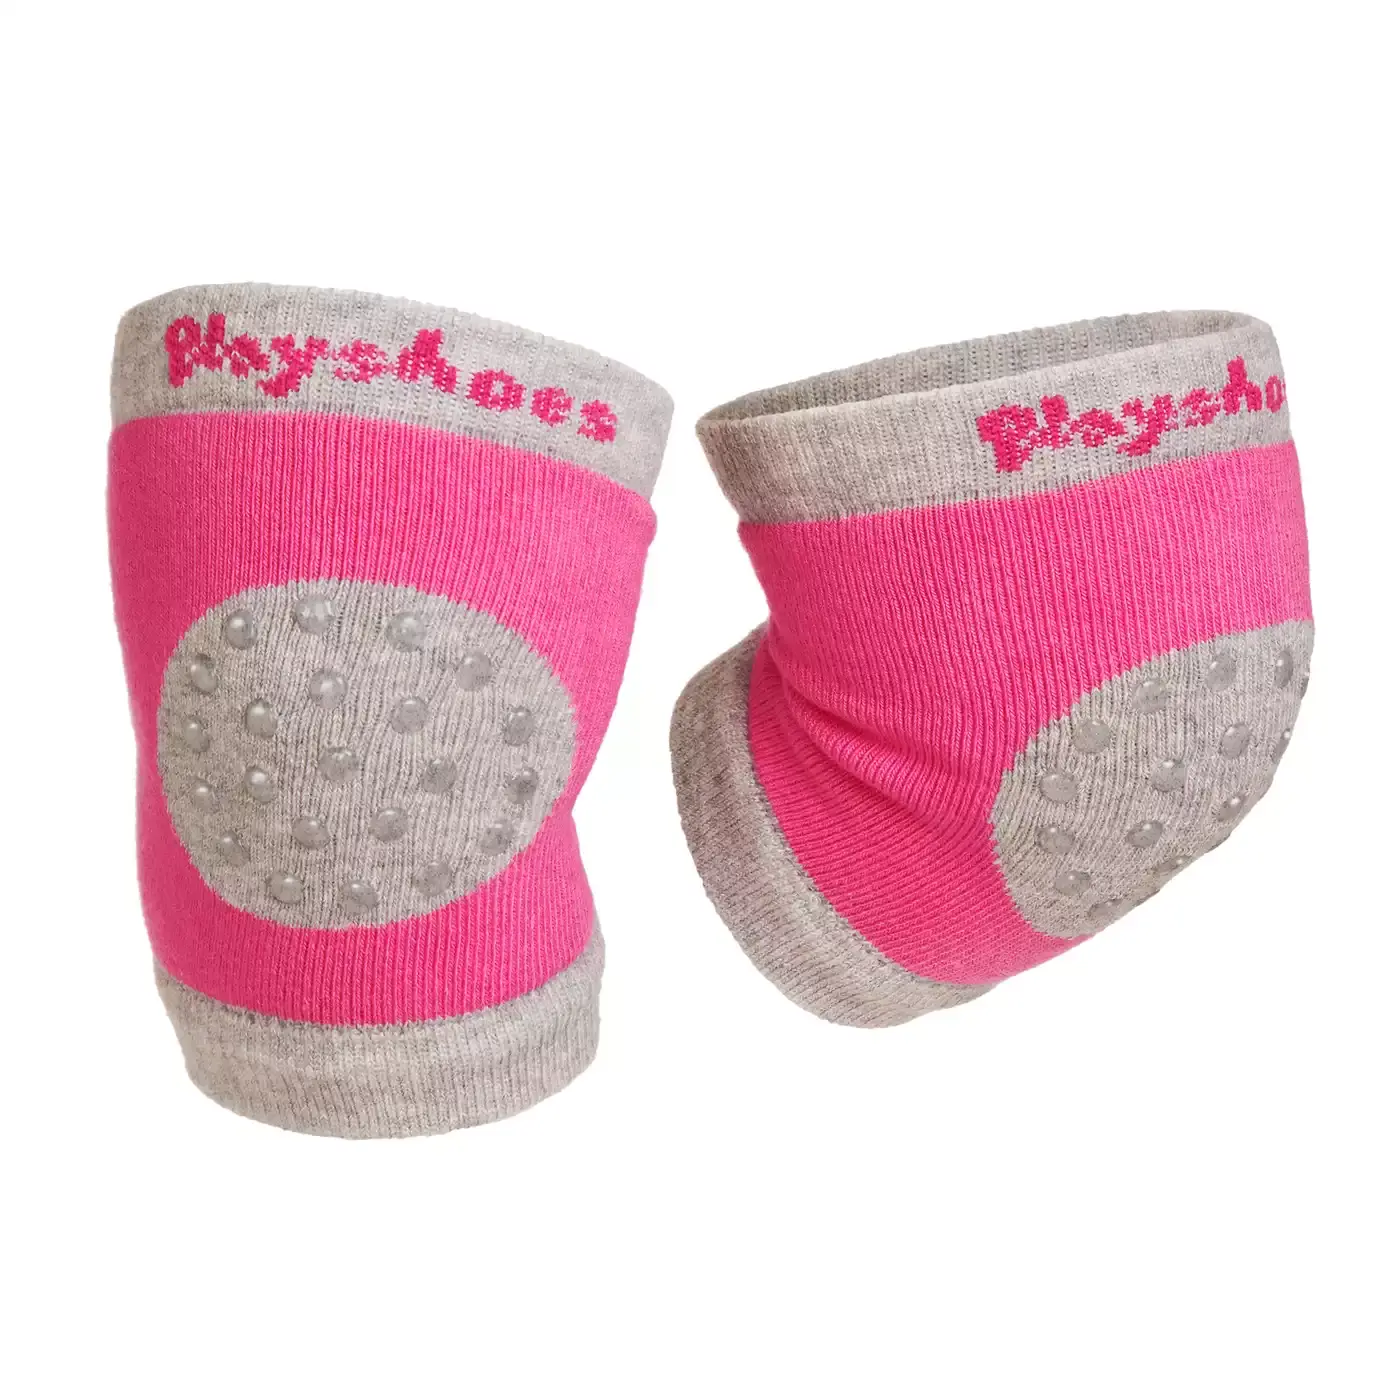 Knieschoner Playshoes Rosa Pink 2019579004003 1